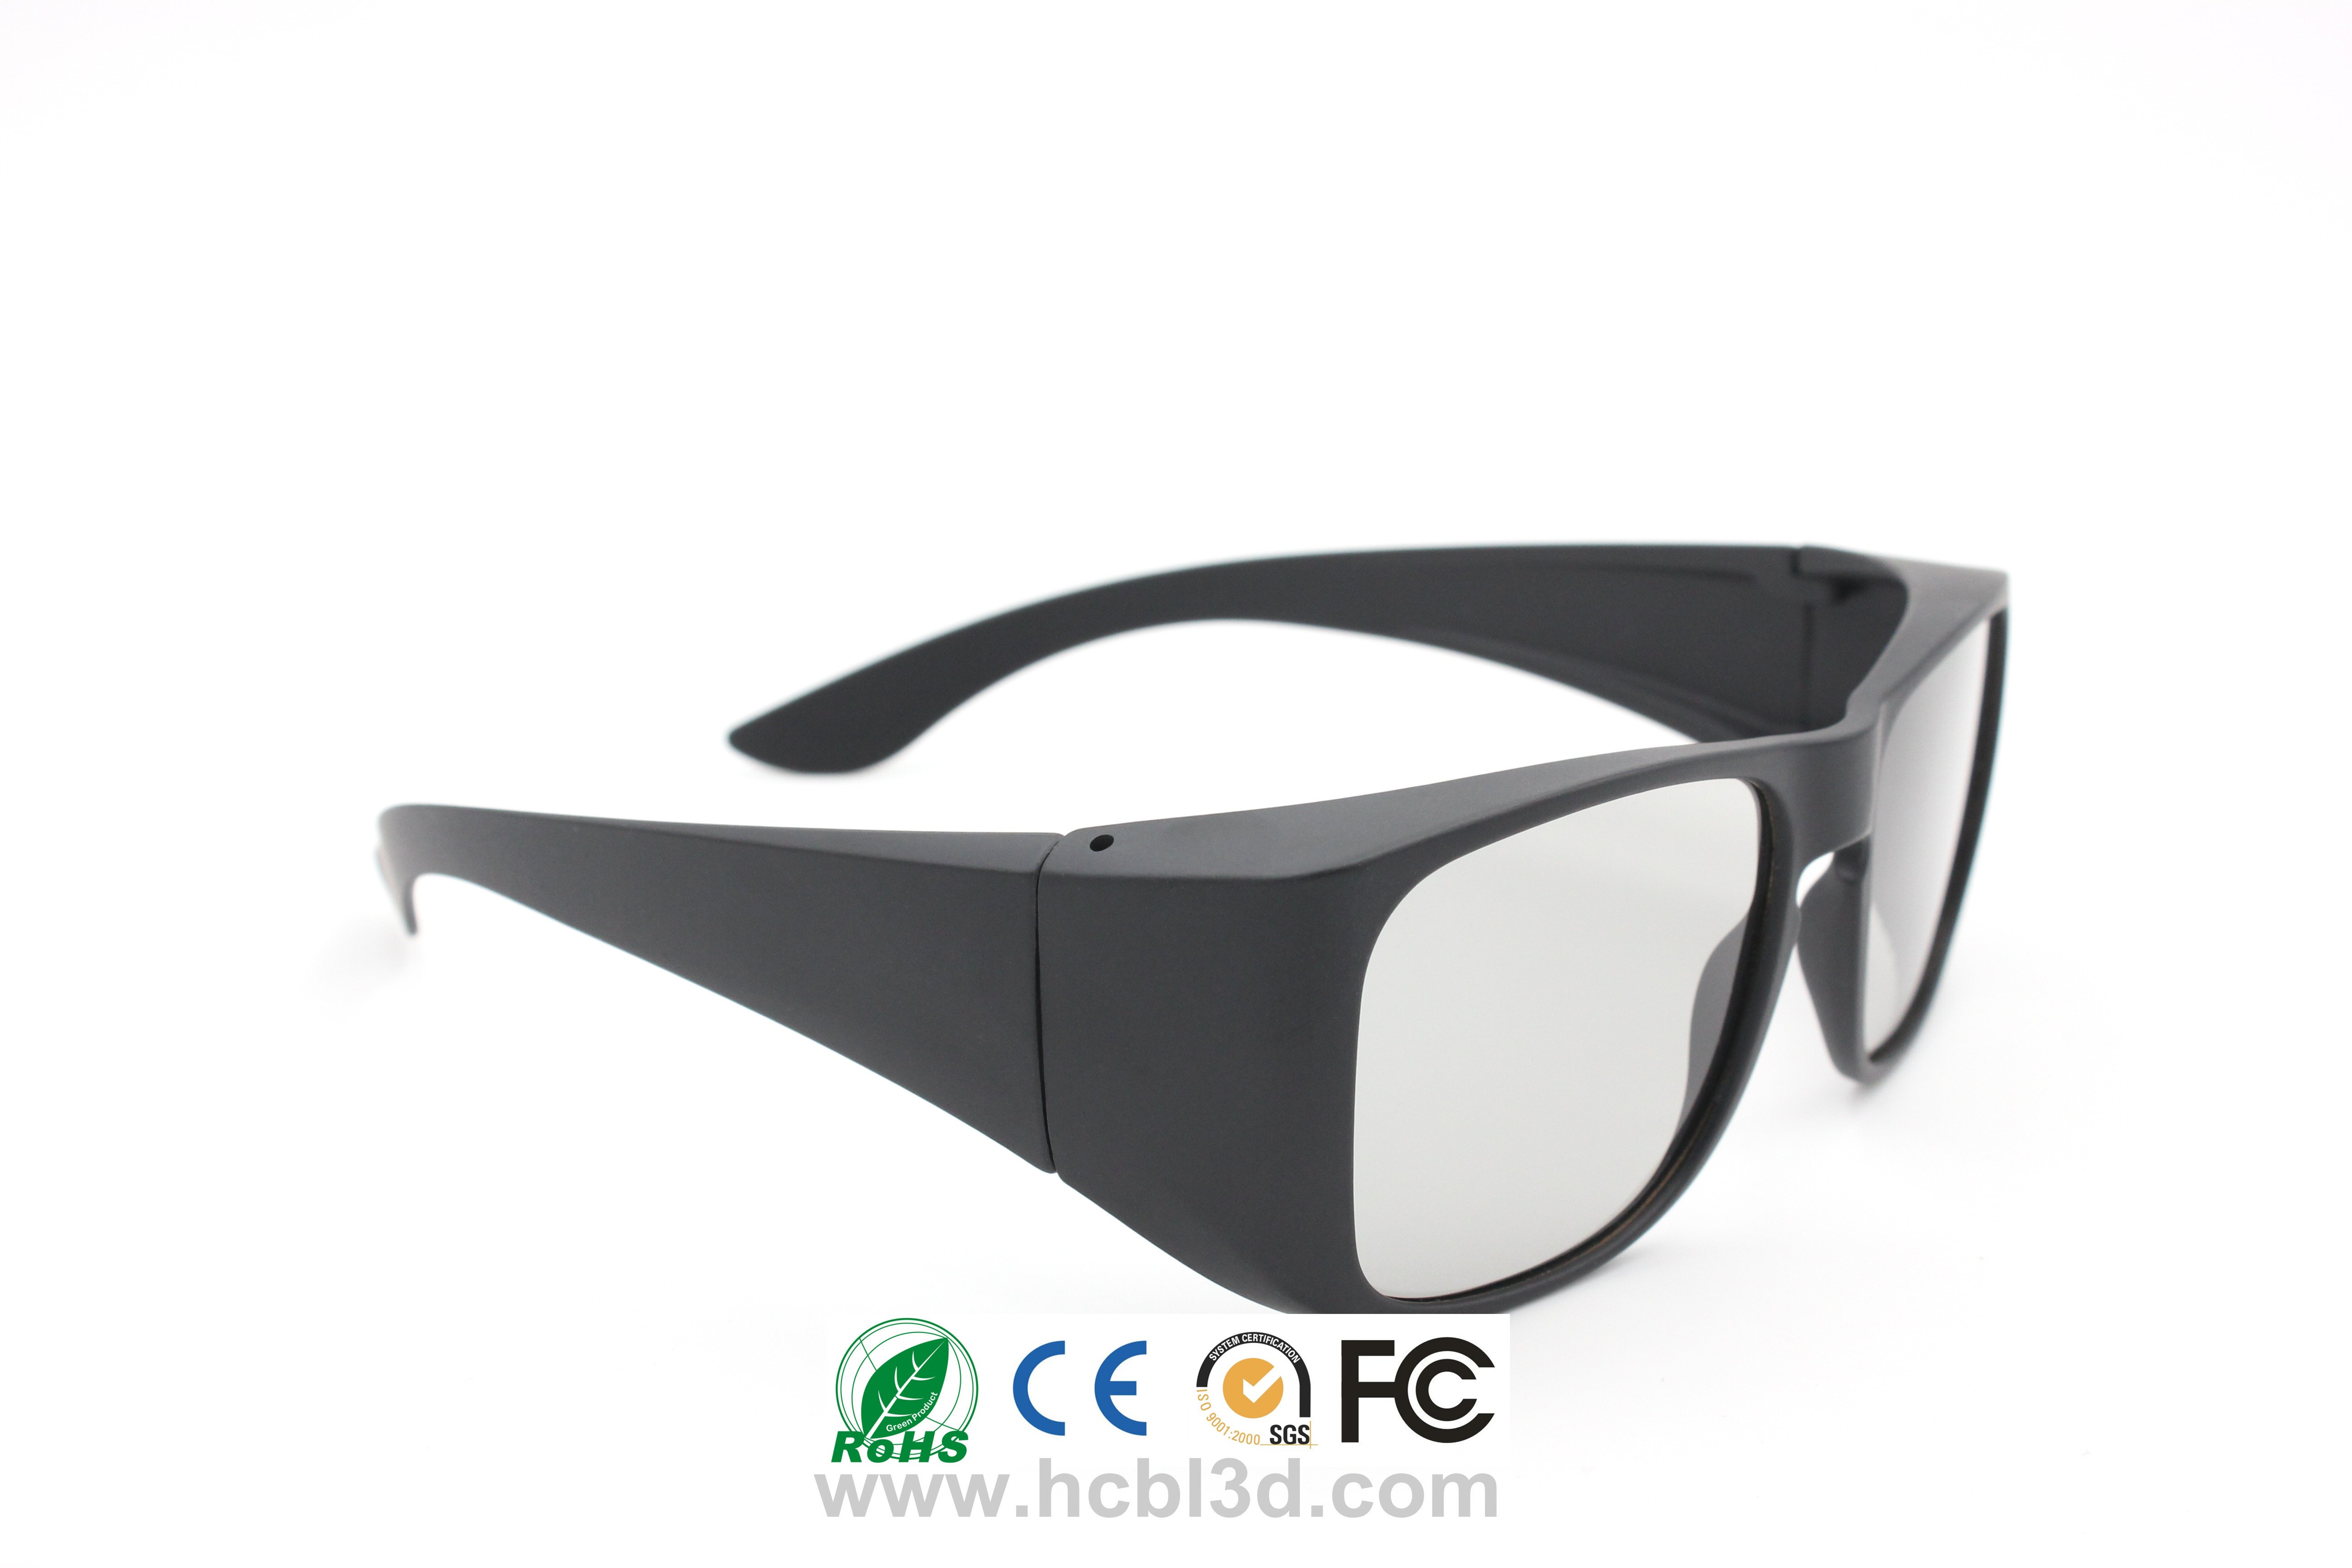 3D glasses with big frame, Caravan Type, Wide Field of Vision For Digital 3D Cinemas